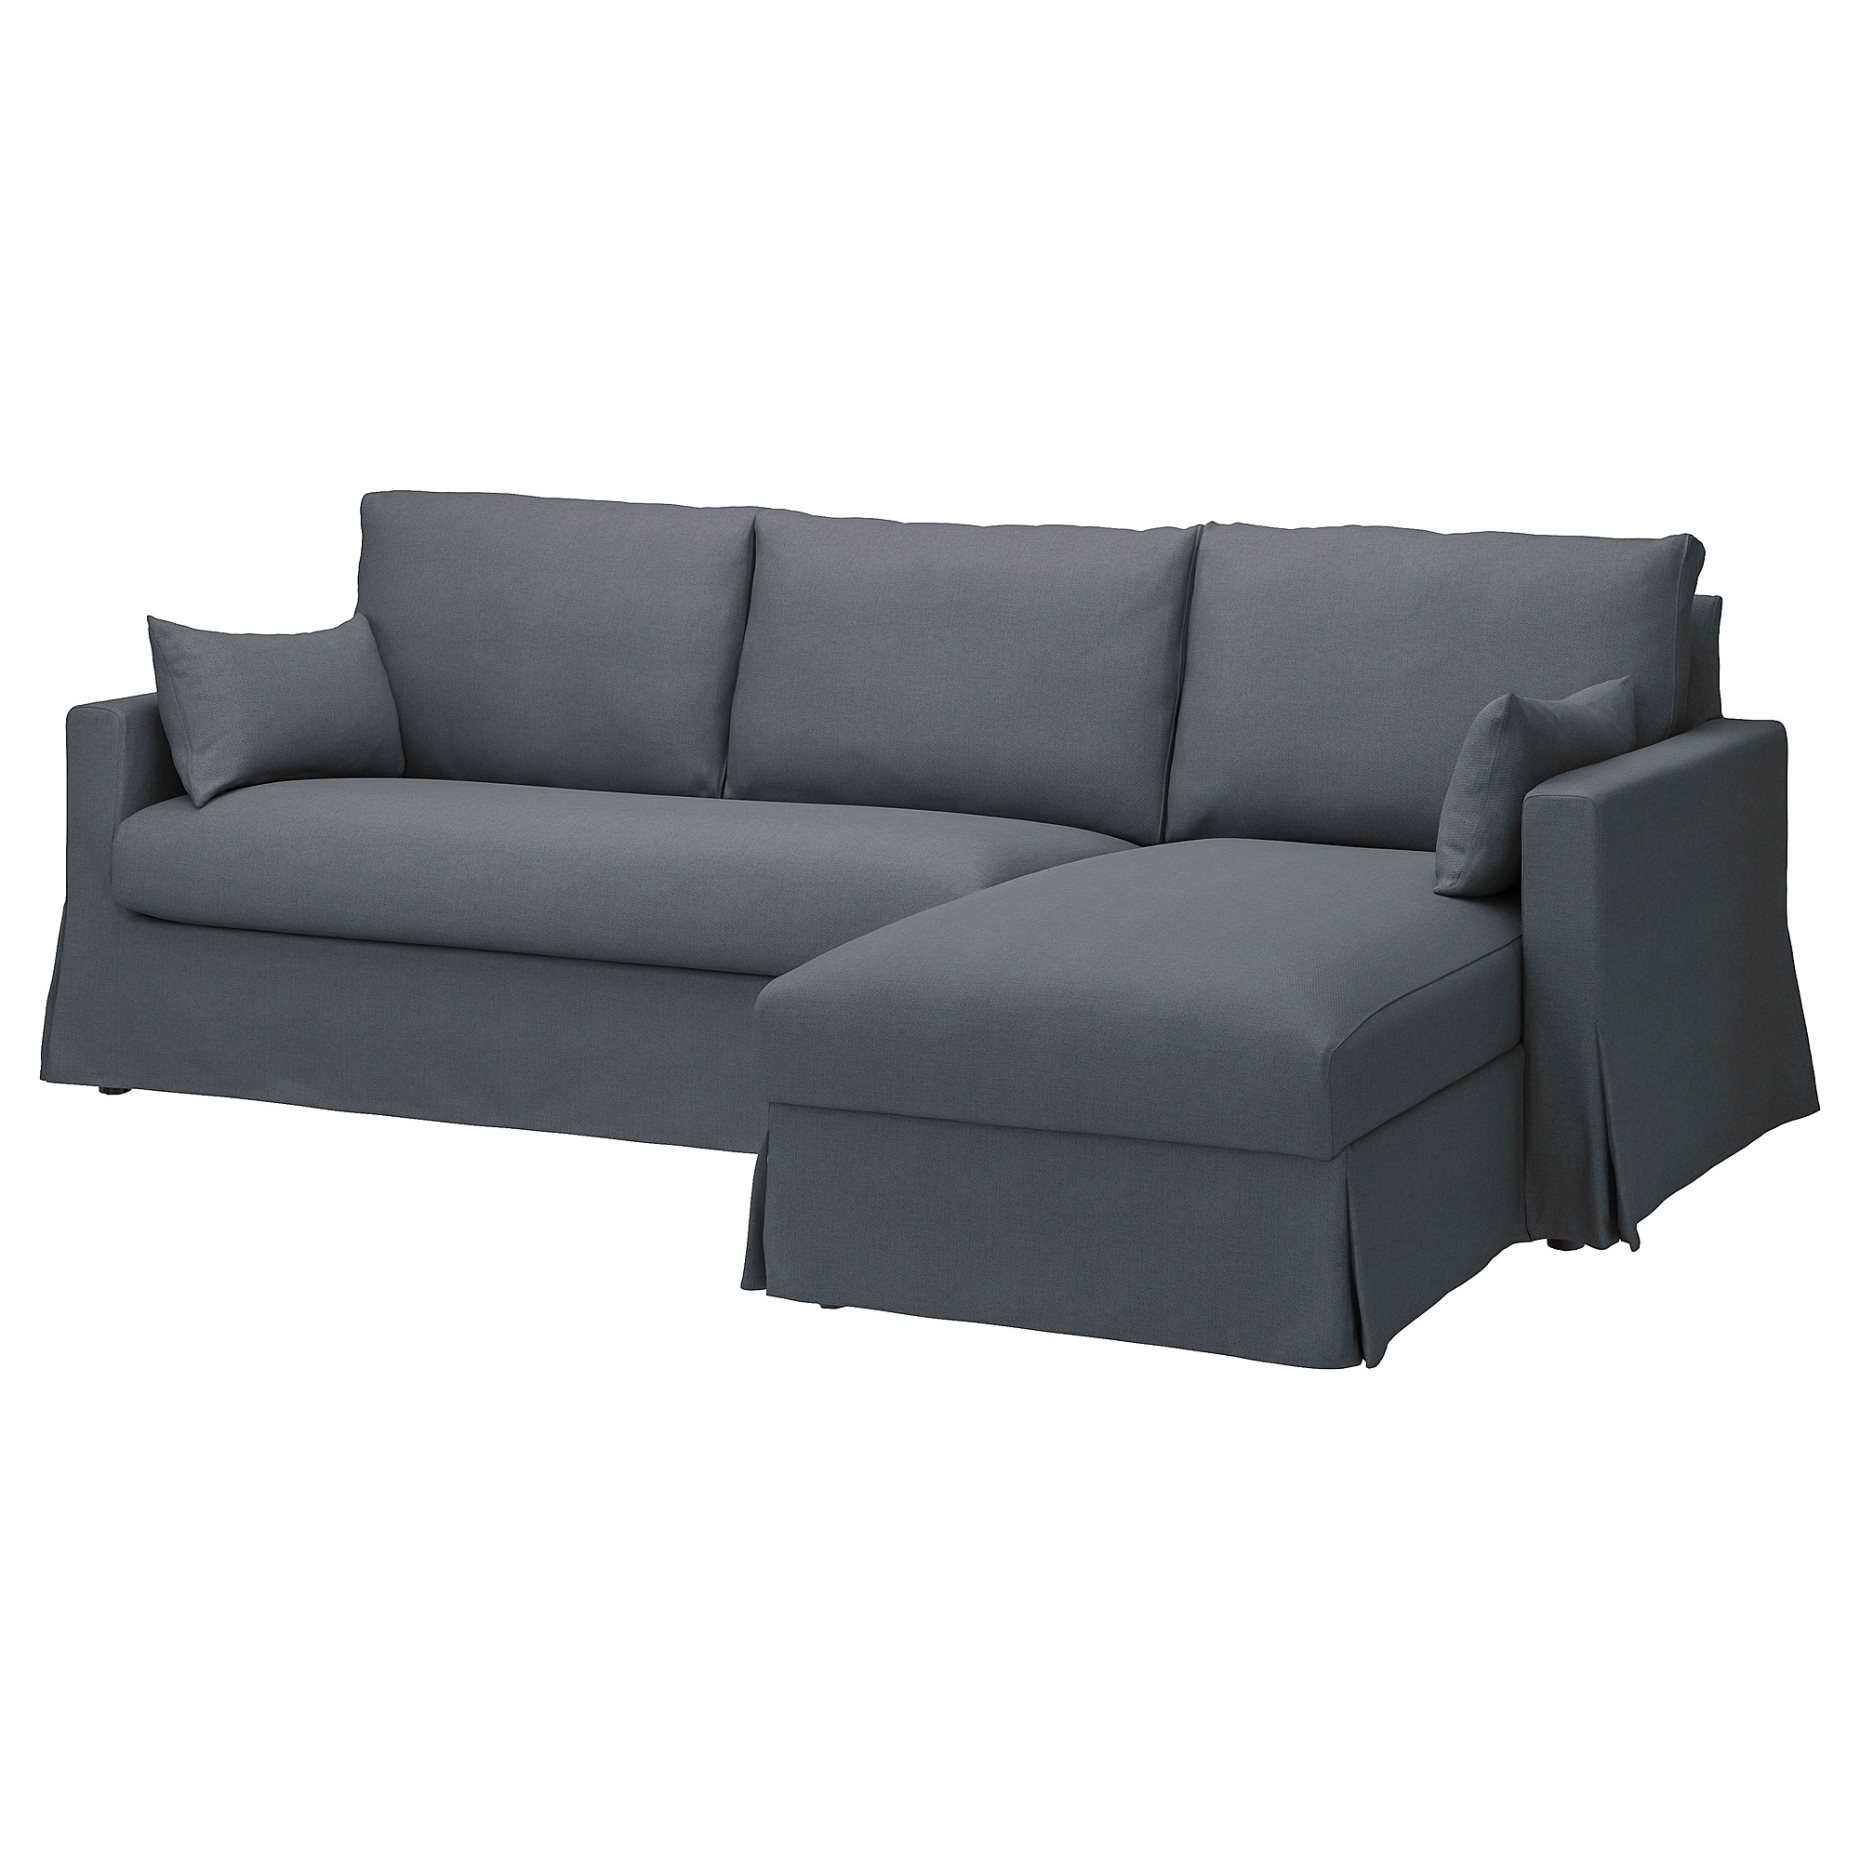 HYLTARP, κάλυμμα για 3θέσιο καναπέ με σεζλονγκ, δεξί, 805.499.05